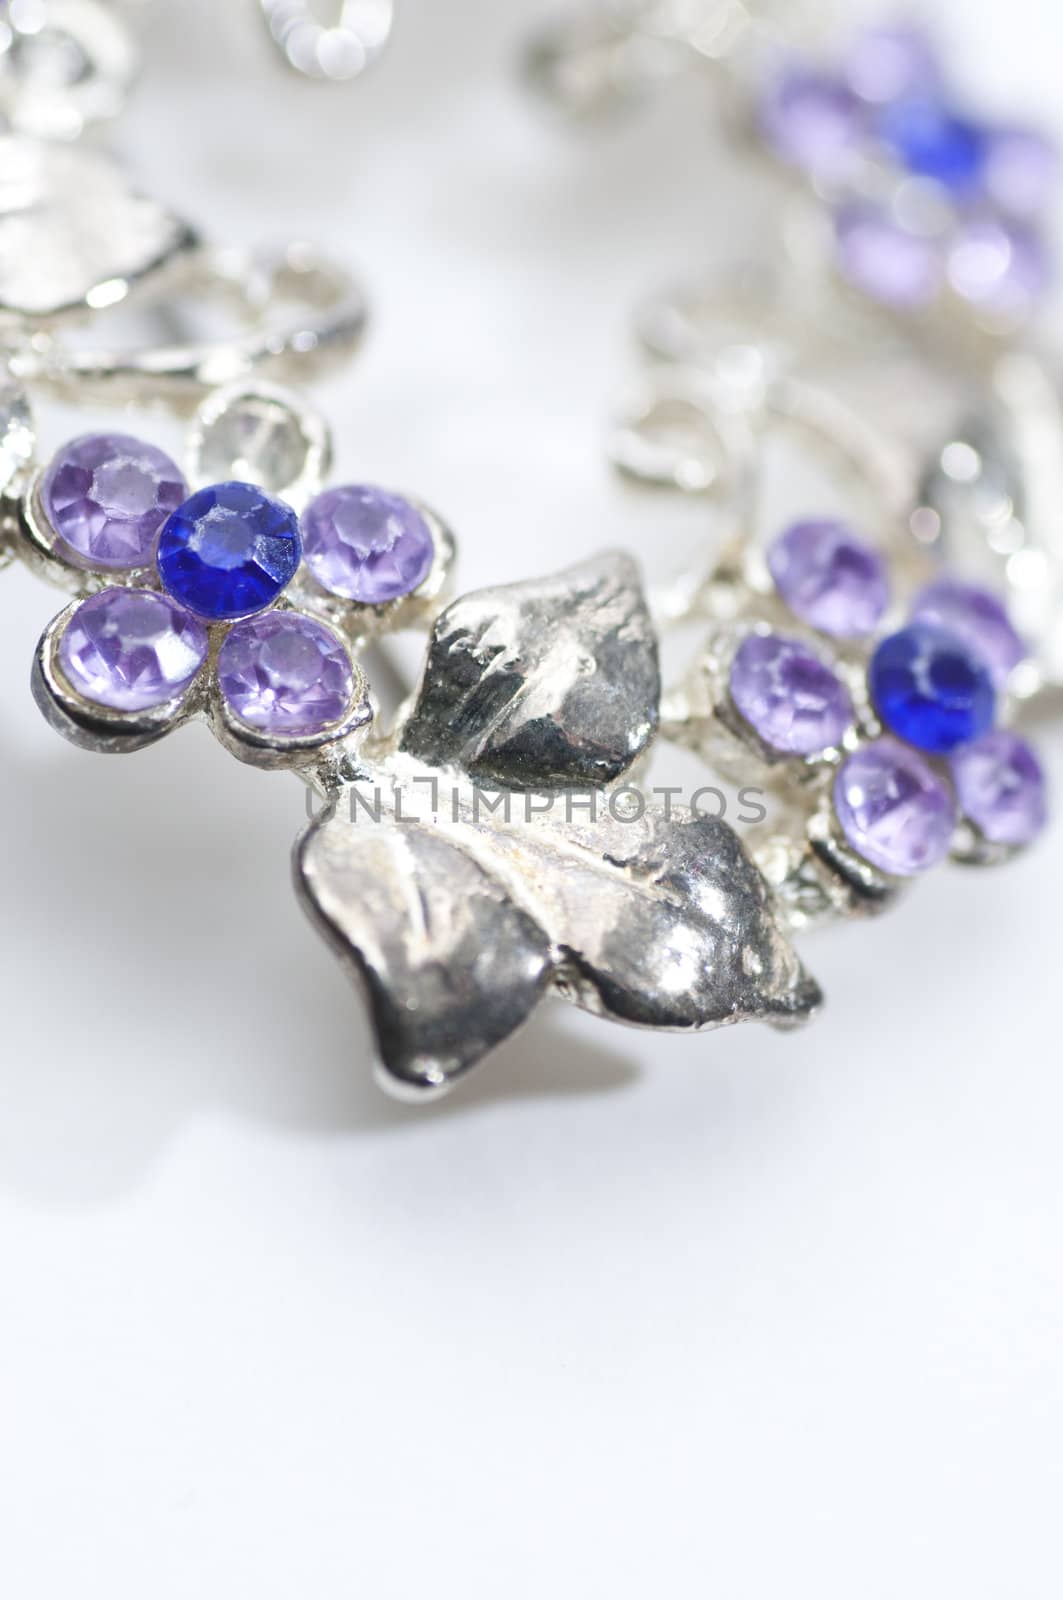 Jewels by FernandoCortes